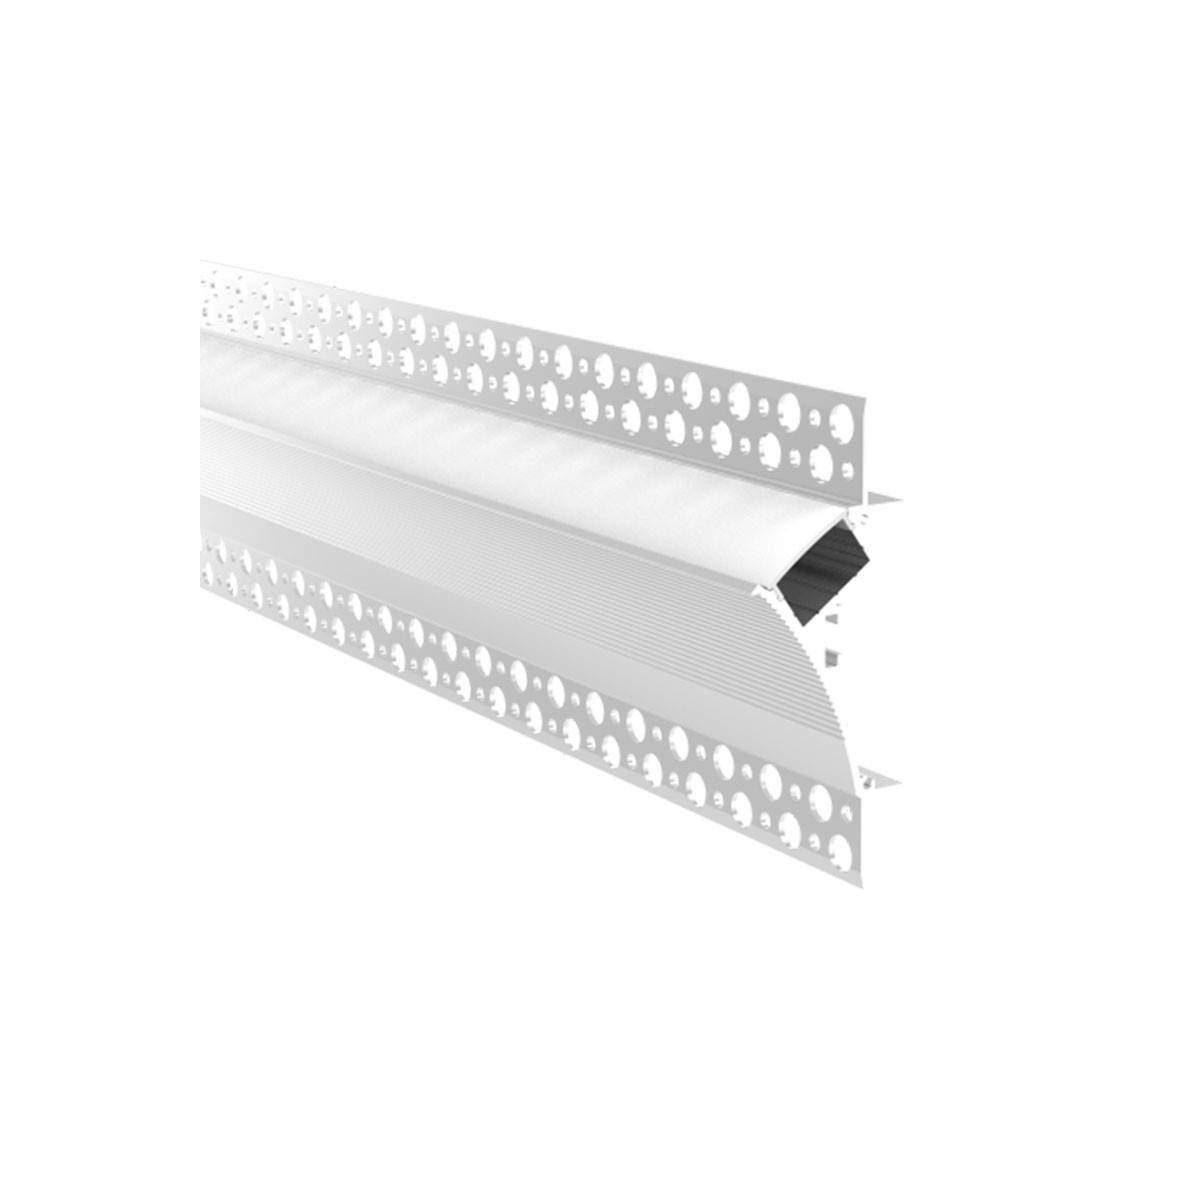 Profile for LED strip integration Plaster/Pladur 96x35 Trimless Bottom/Up Corner (2m)